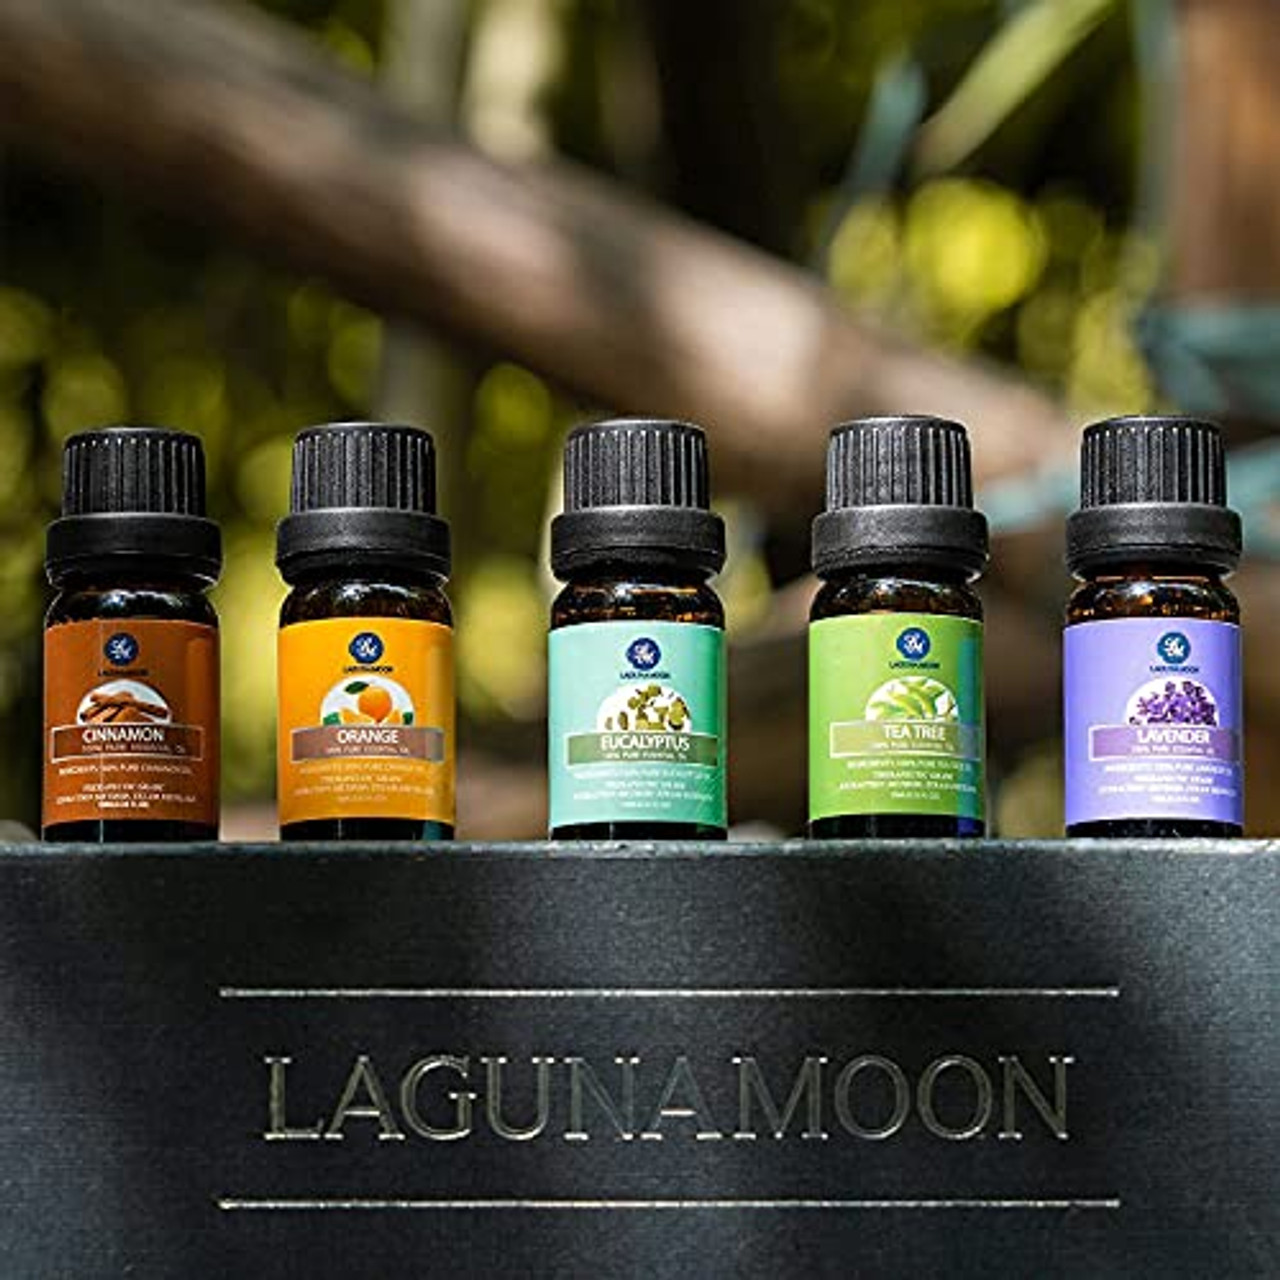 Cliganic Organic Essential Oils Set (Top 5) - 100% Pure Natural -  Aromatherapy, Candle Making - Peppermint, Lavender, Eucalyptus, Lemongrass  & Orange